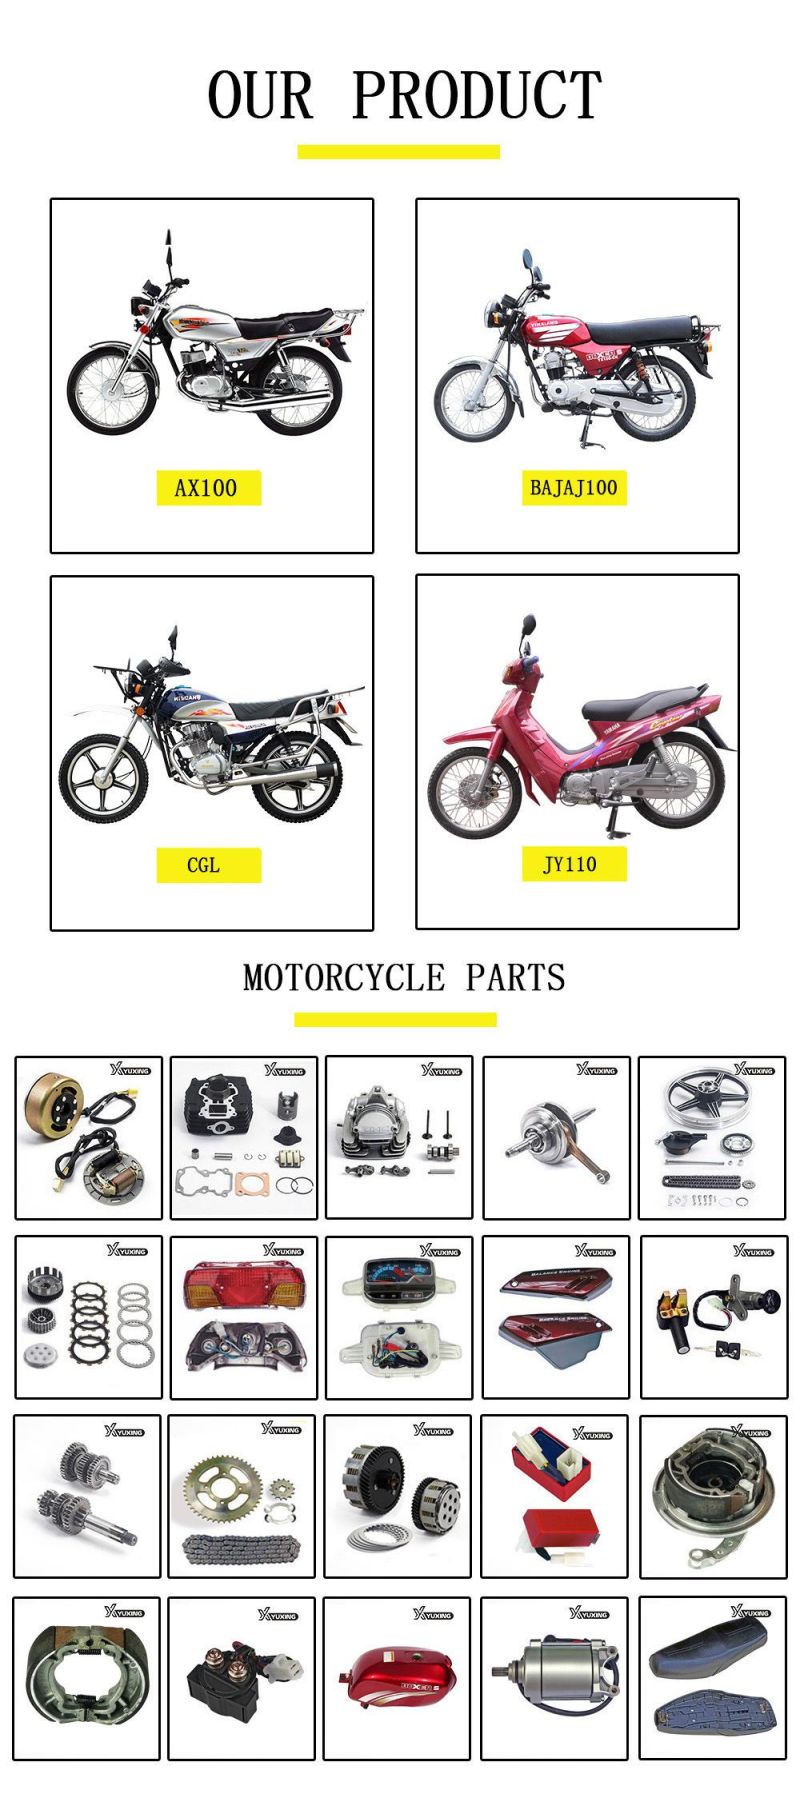 Yuxing Motorcycle Engine Parts Motorcycle Cylinder (piston, piston rings)